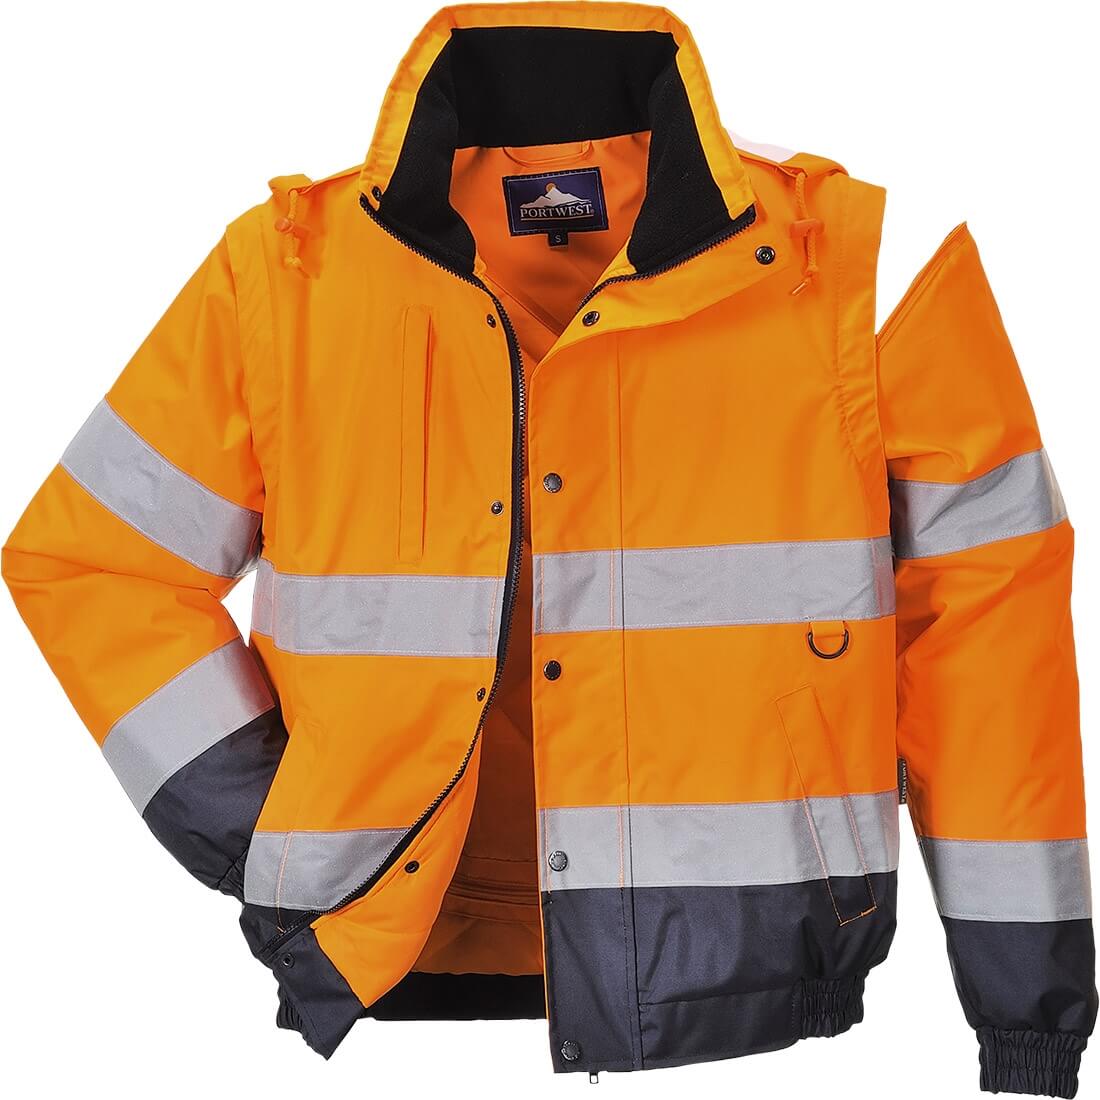 HI-Vis 2-in-1 Jacket - Safetywear